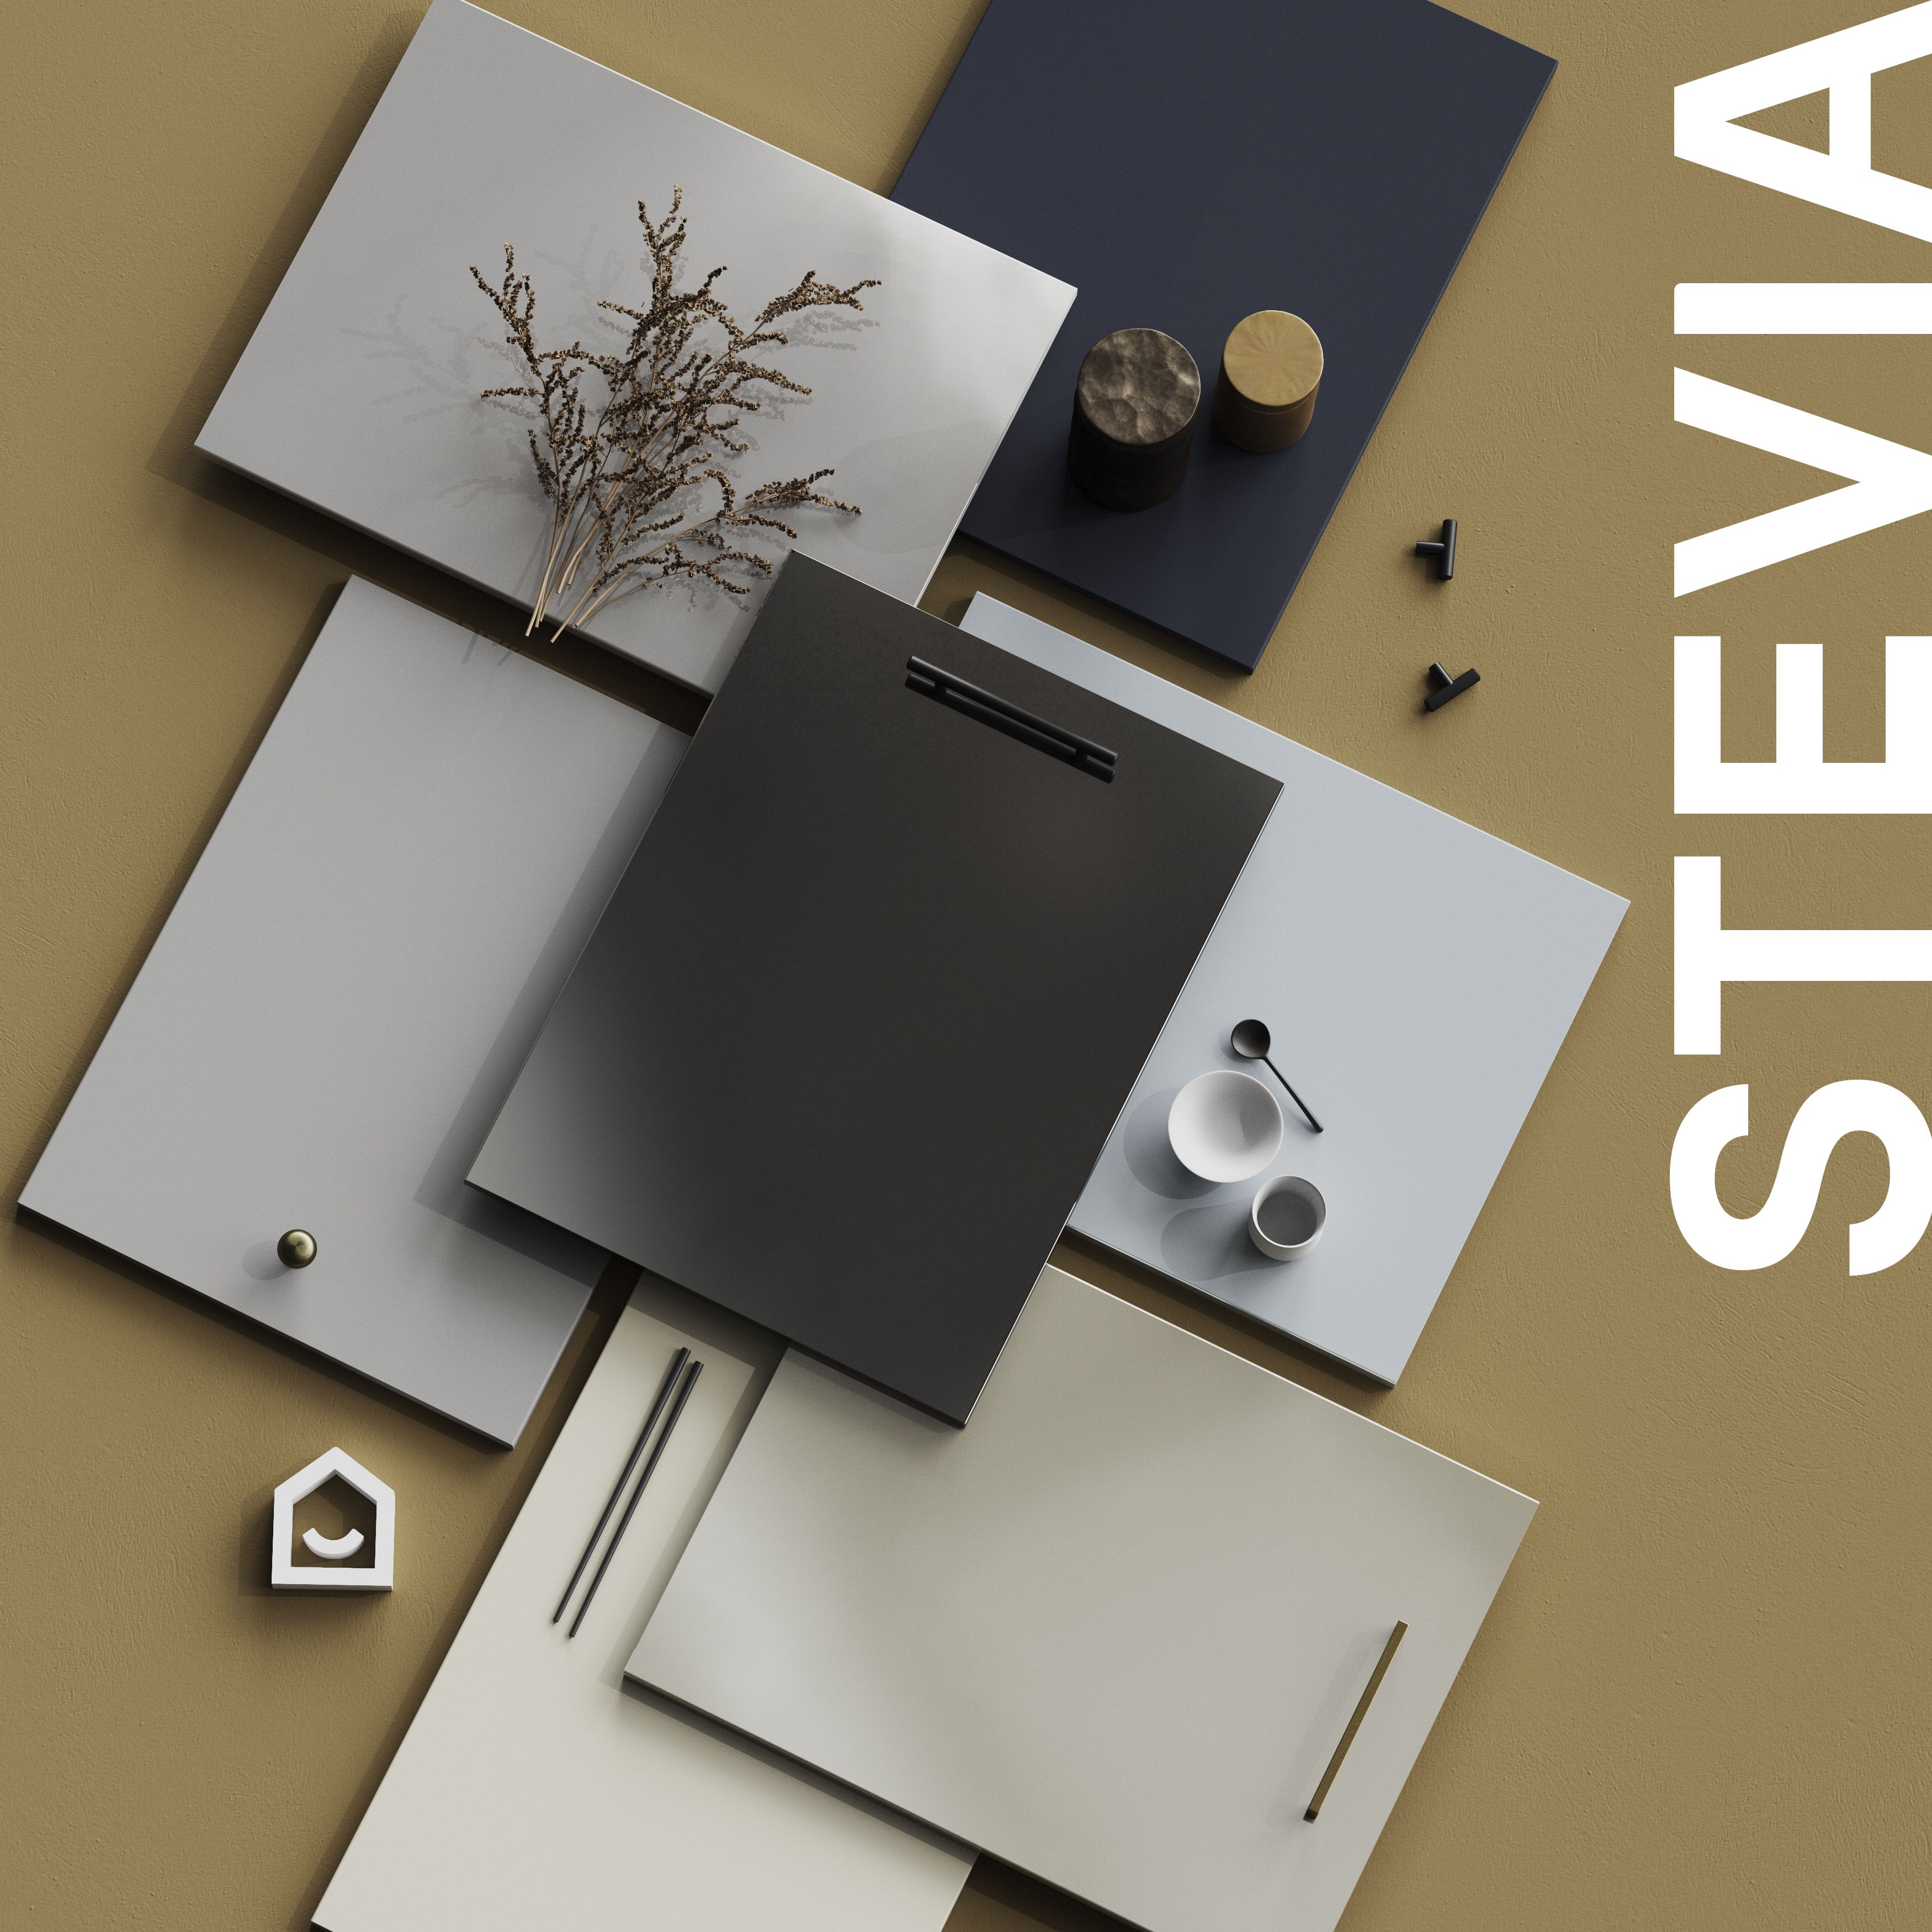 GoodHome Stevia Gloss light grey Drawer front, bridging door & bi fold door, (W)300mm (H)340mm (T)18mm